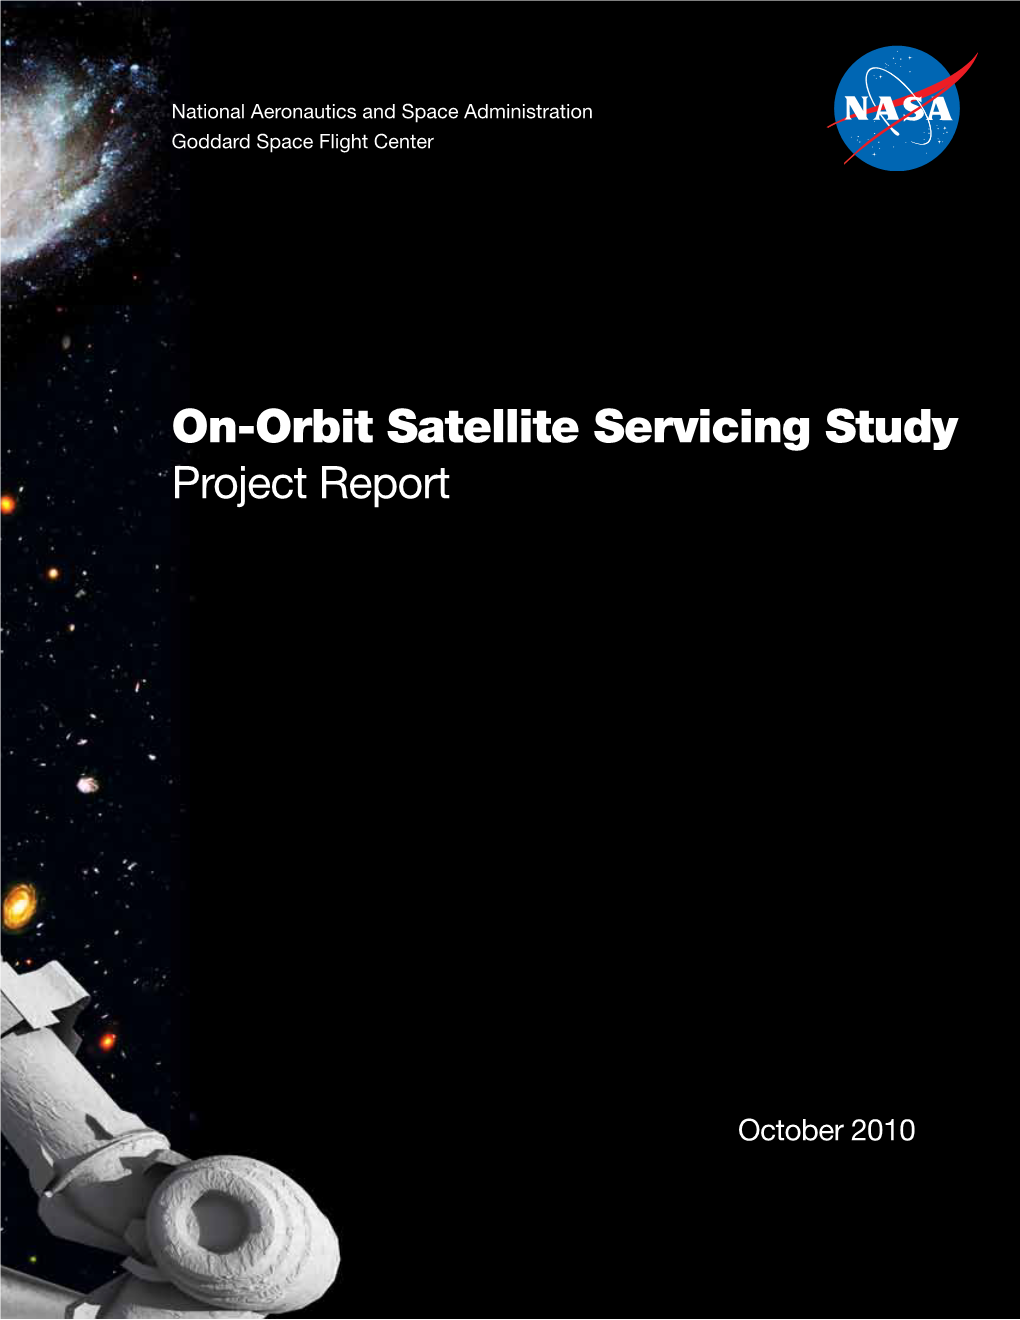 On-Orbit Satellite Servicing Study Project Report